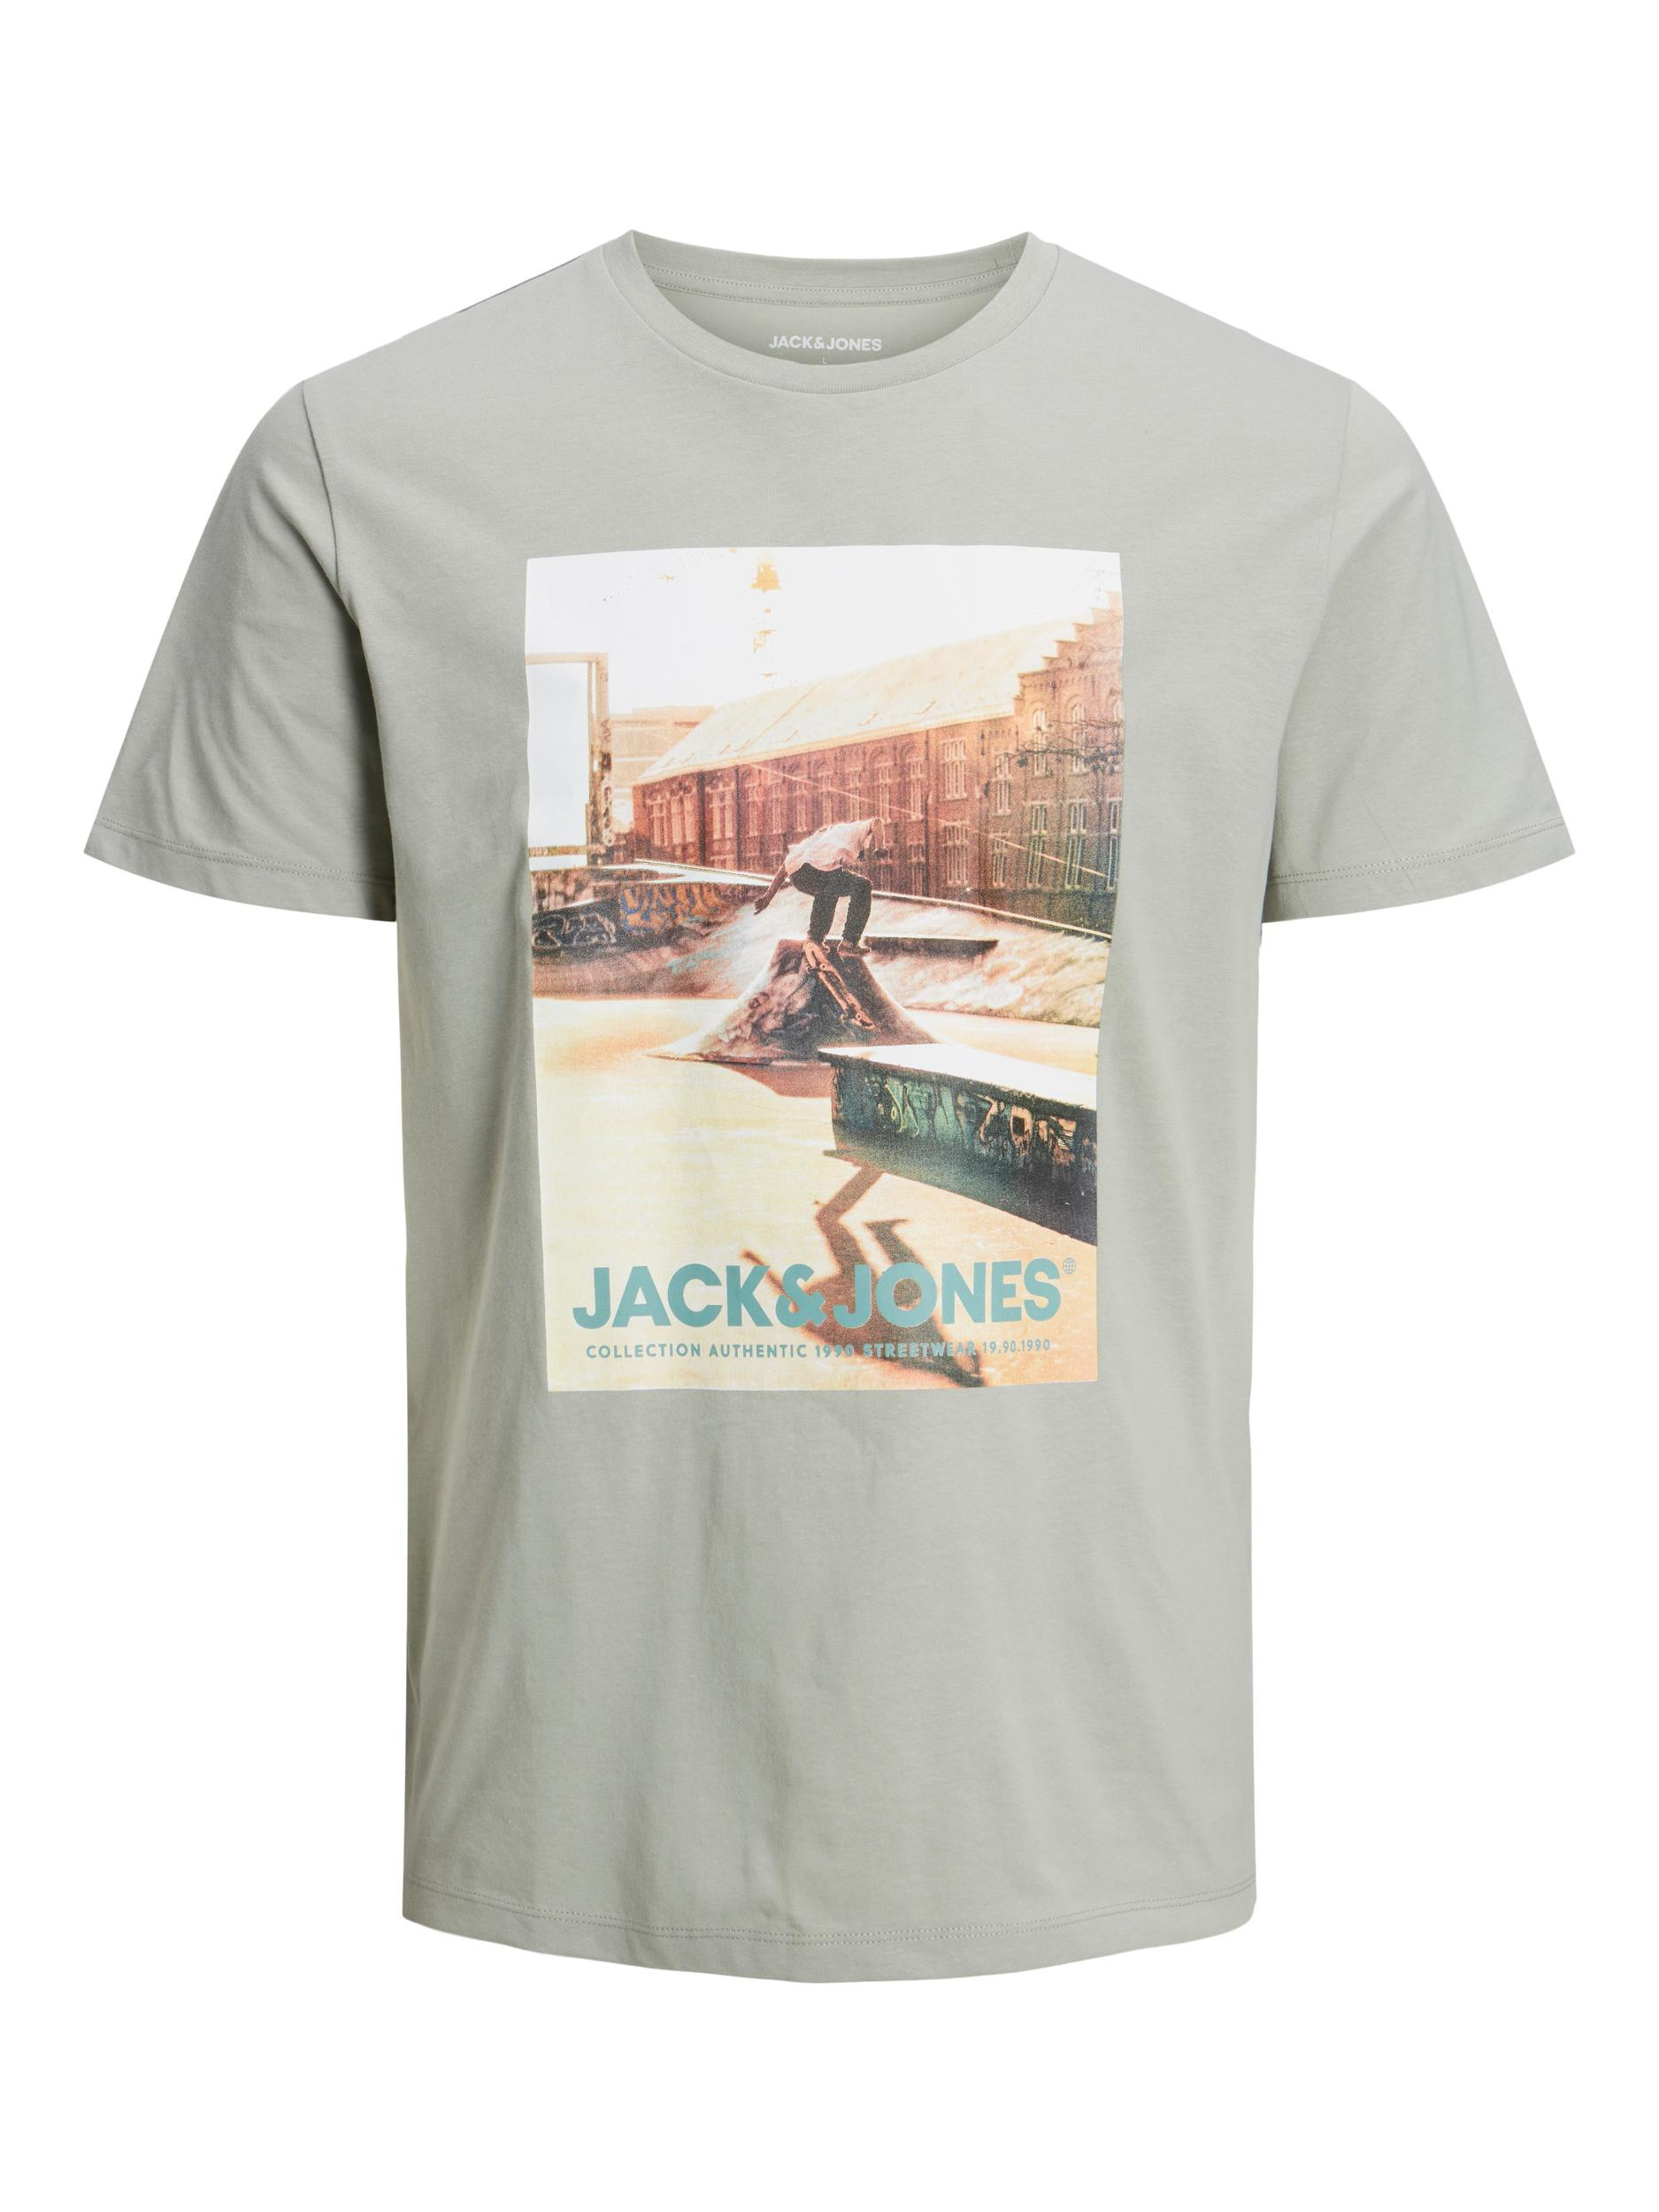 Jack & Jones - T-shirt con stampa in cotone, Grigio chiaro, large image number 0